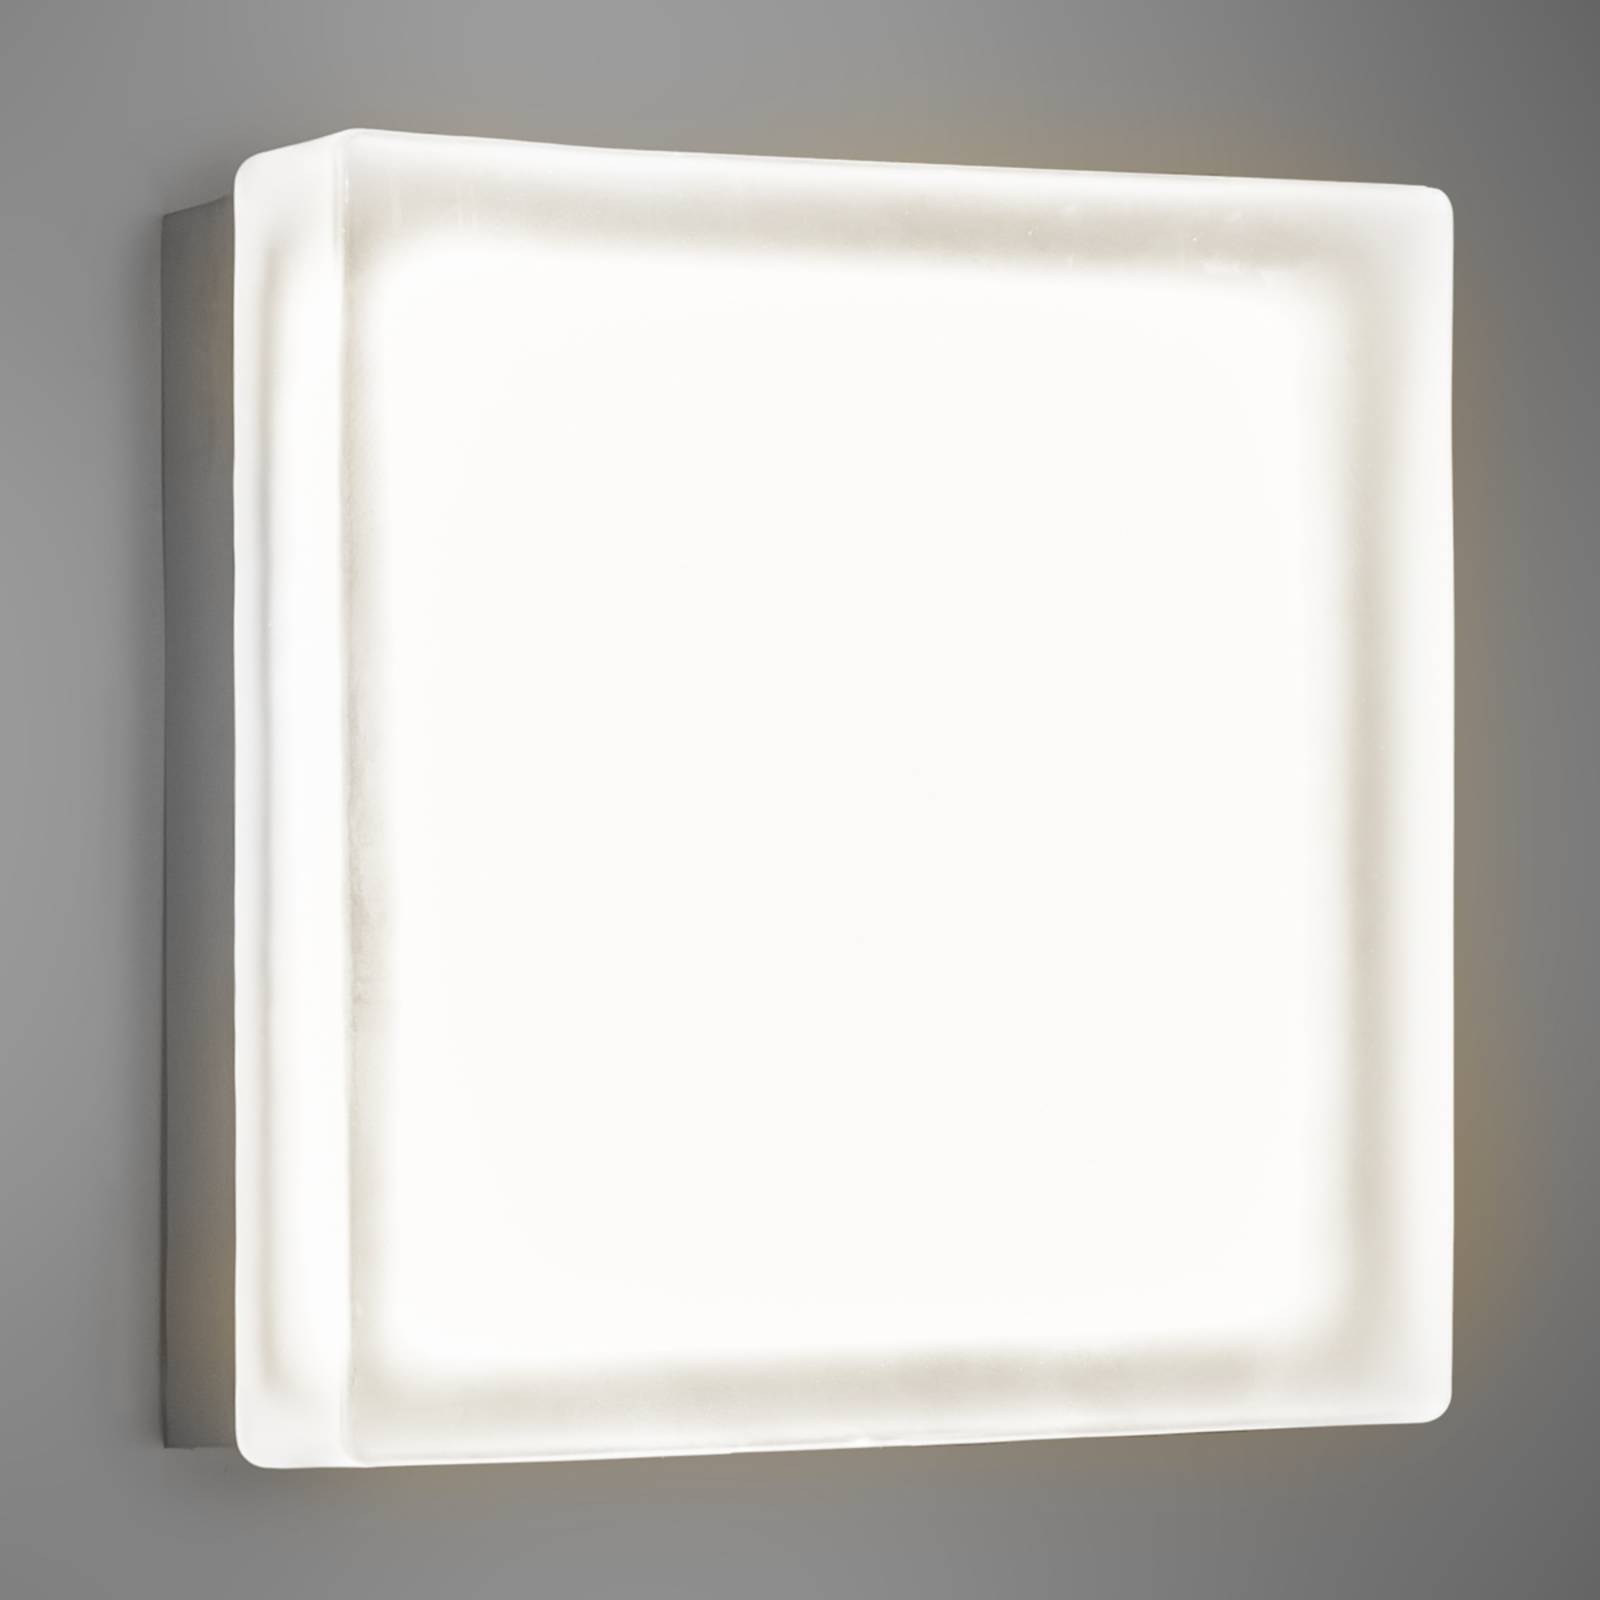 Quadratische LED-Wandleuchte Briq 02 warmweiß